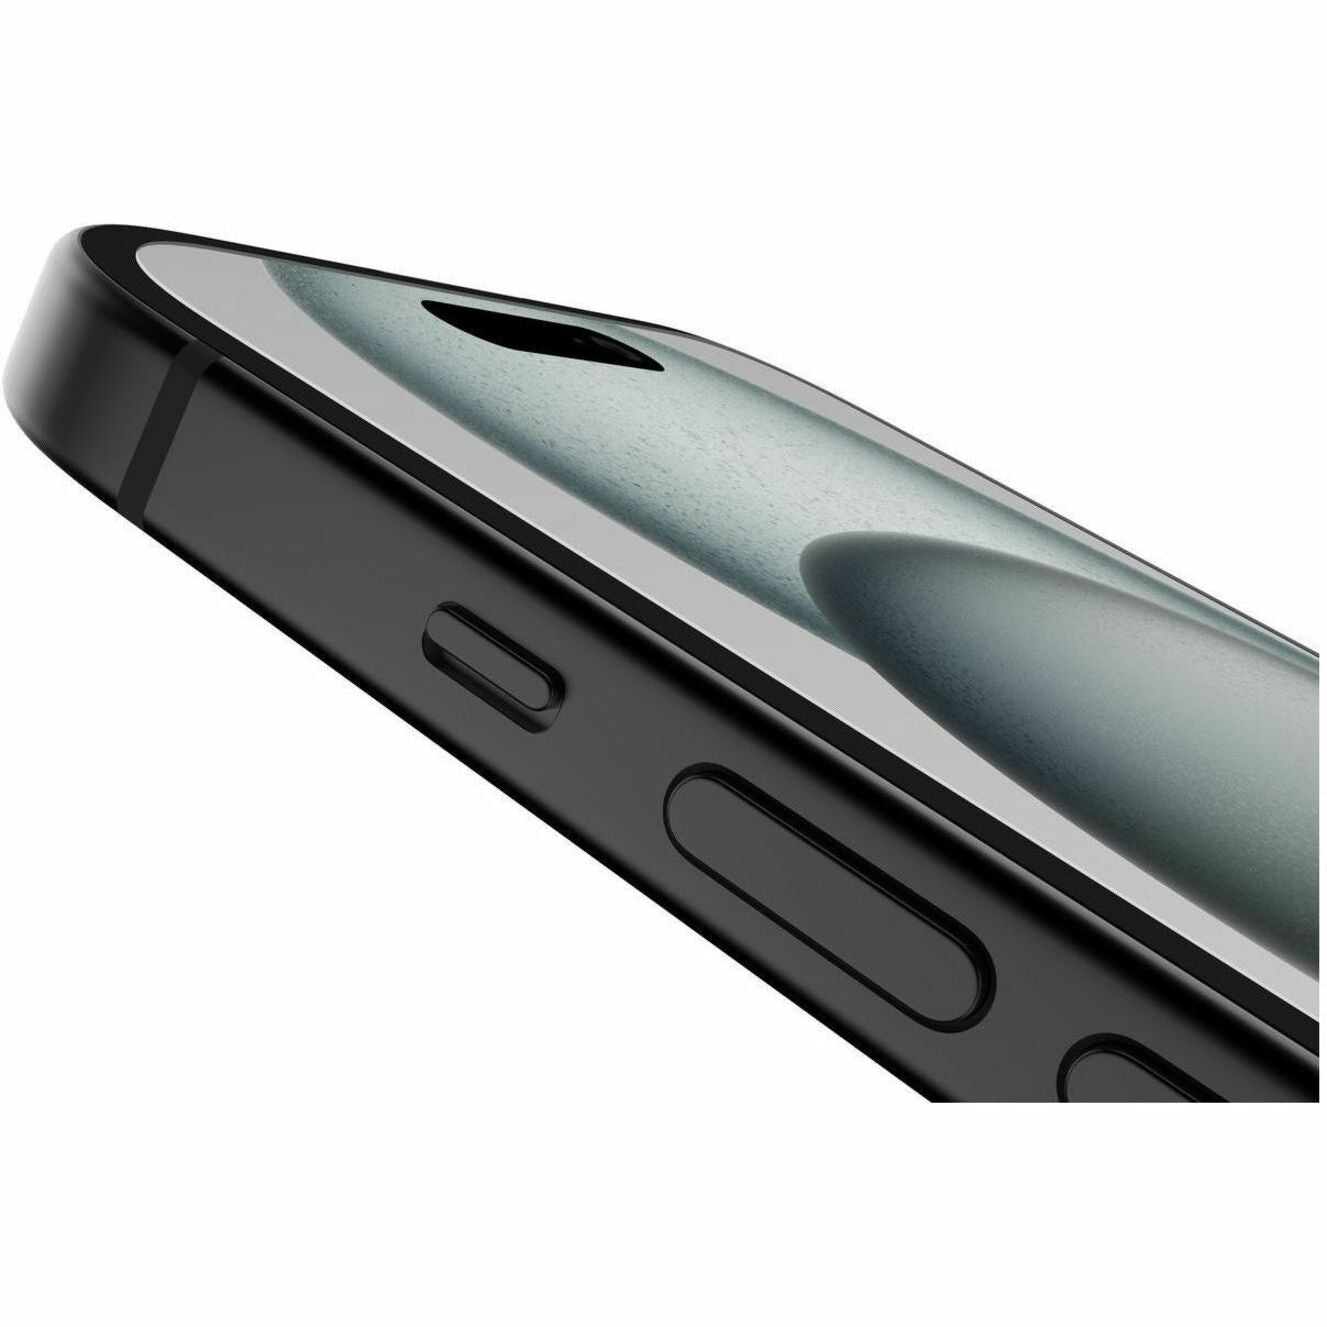 Belkin OVA131ZZ ScreenForce UltraGlass 2 Treated Screen Protector for iPhone 15, Crystal Clear Image, Bubble-free